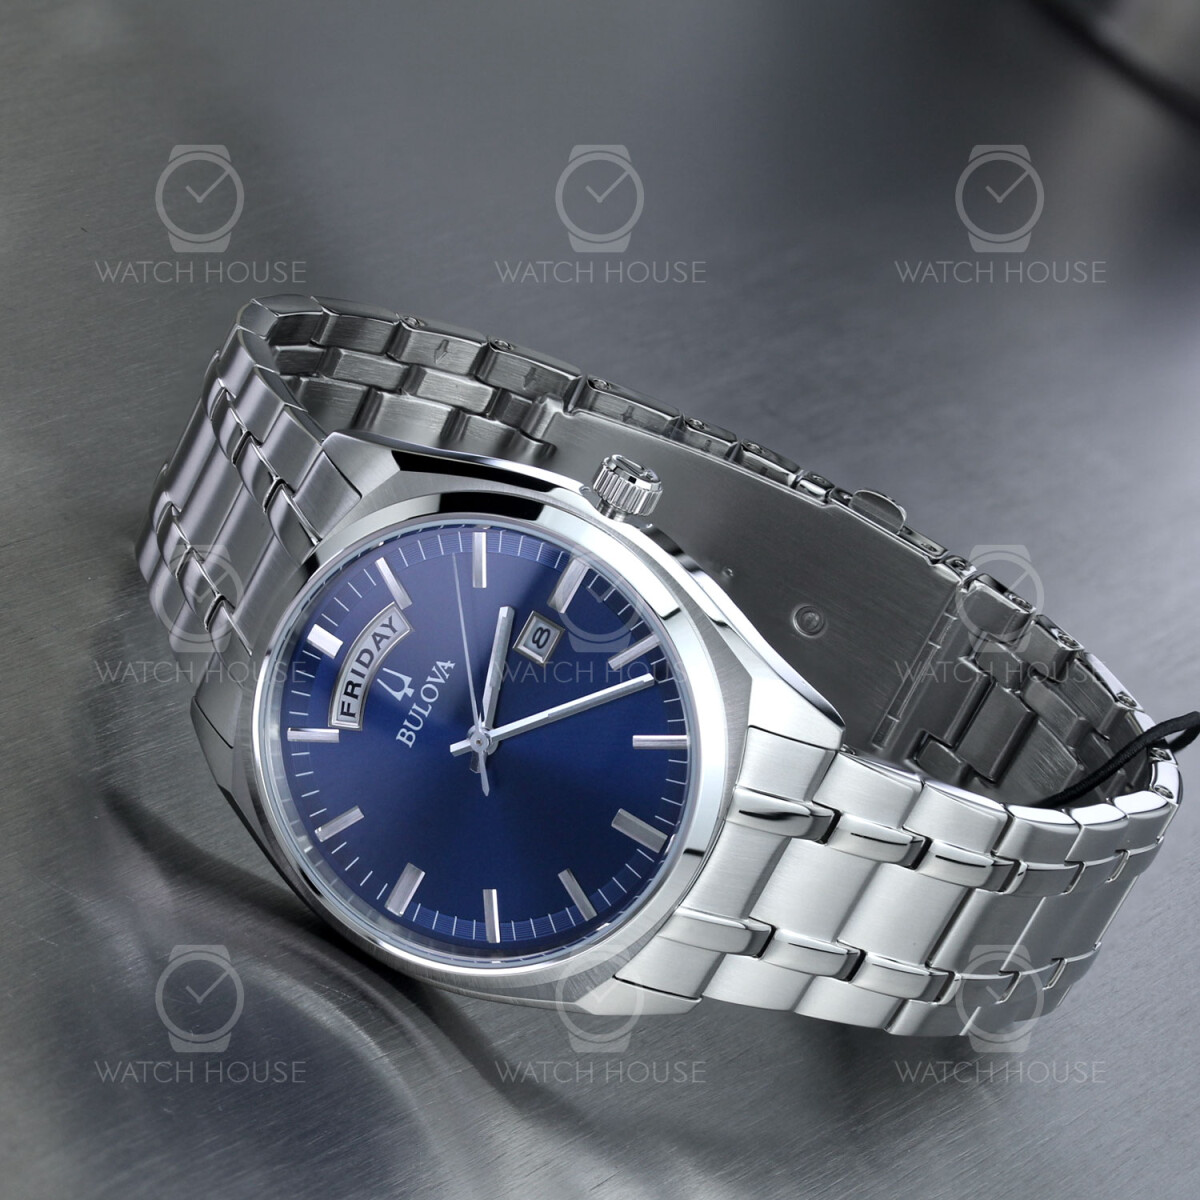 Bulova Surveyor 96C125 Deep blue men's watch with day and date display